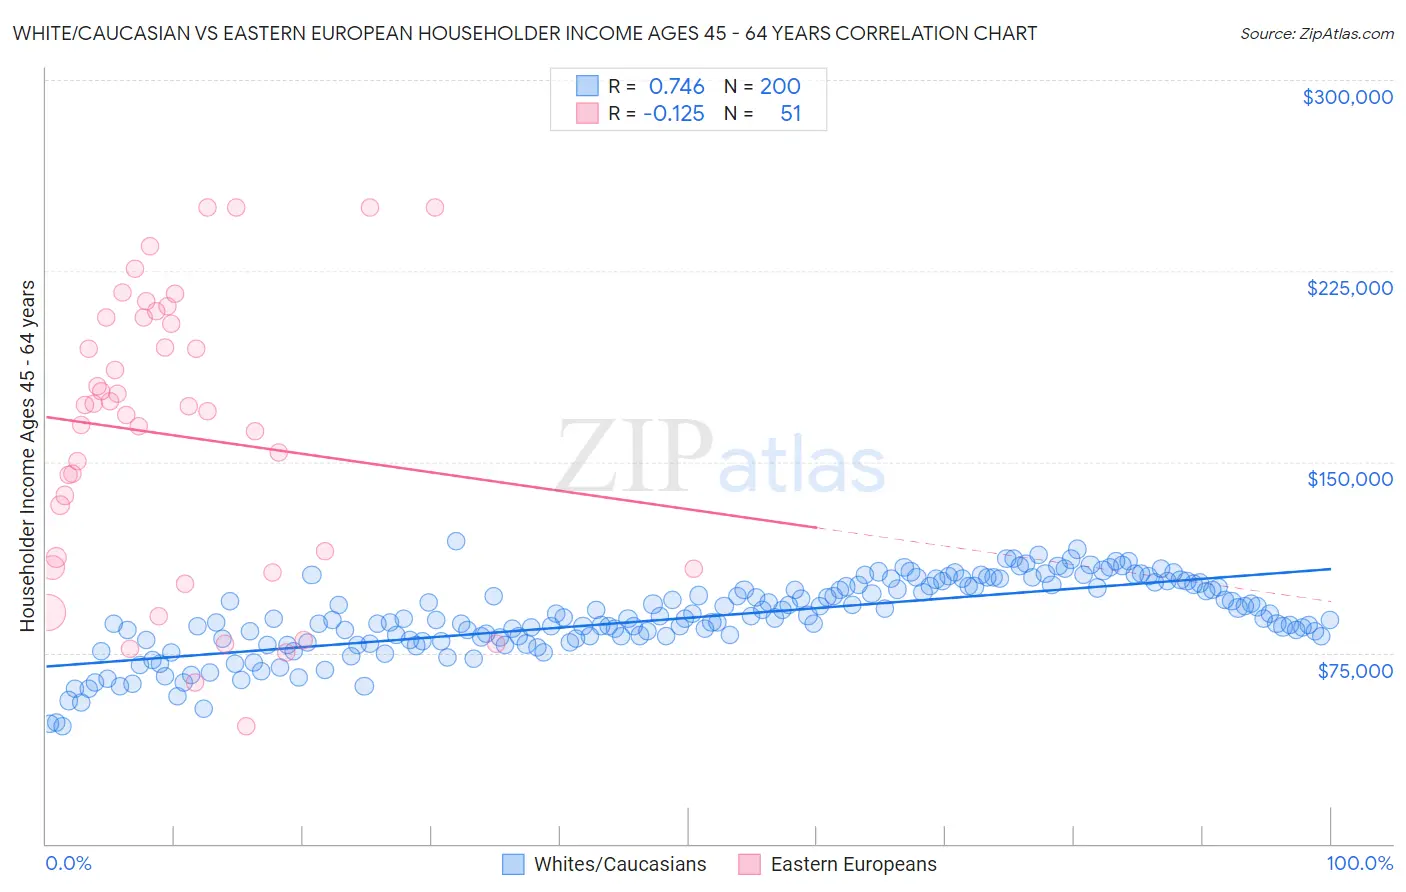 White/Caucasian vs Eastern European Householder Income Ages 45 - 64 years